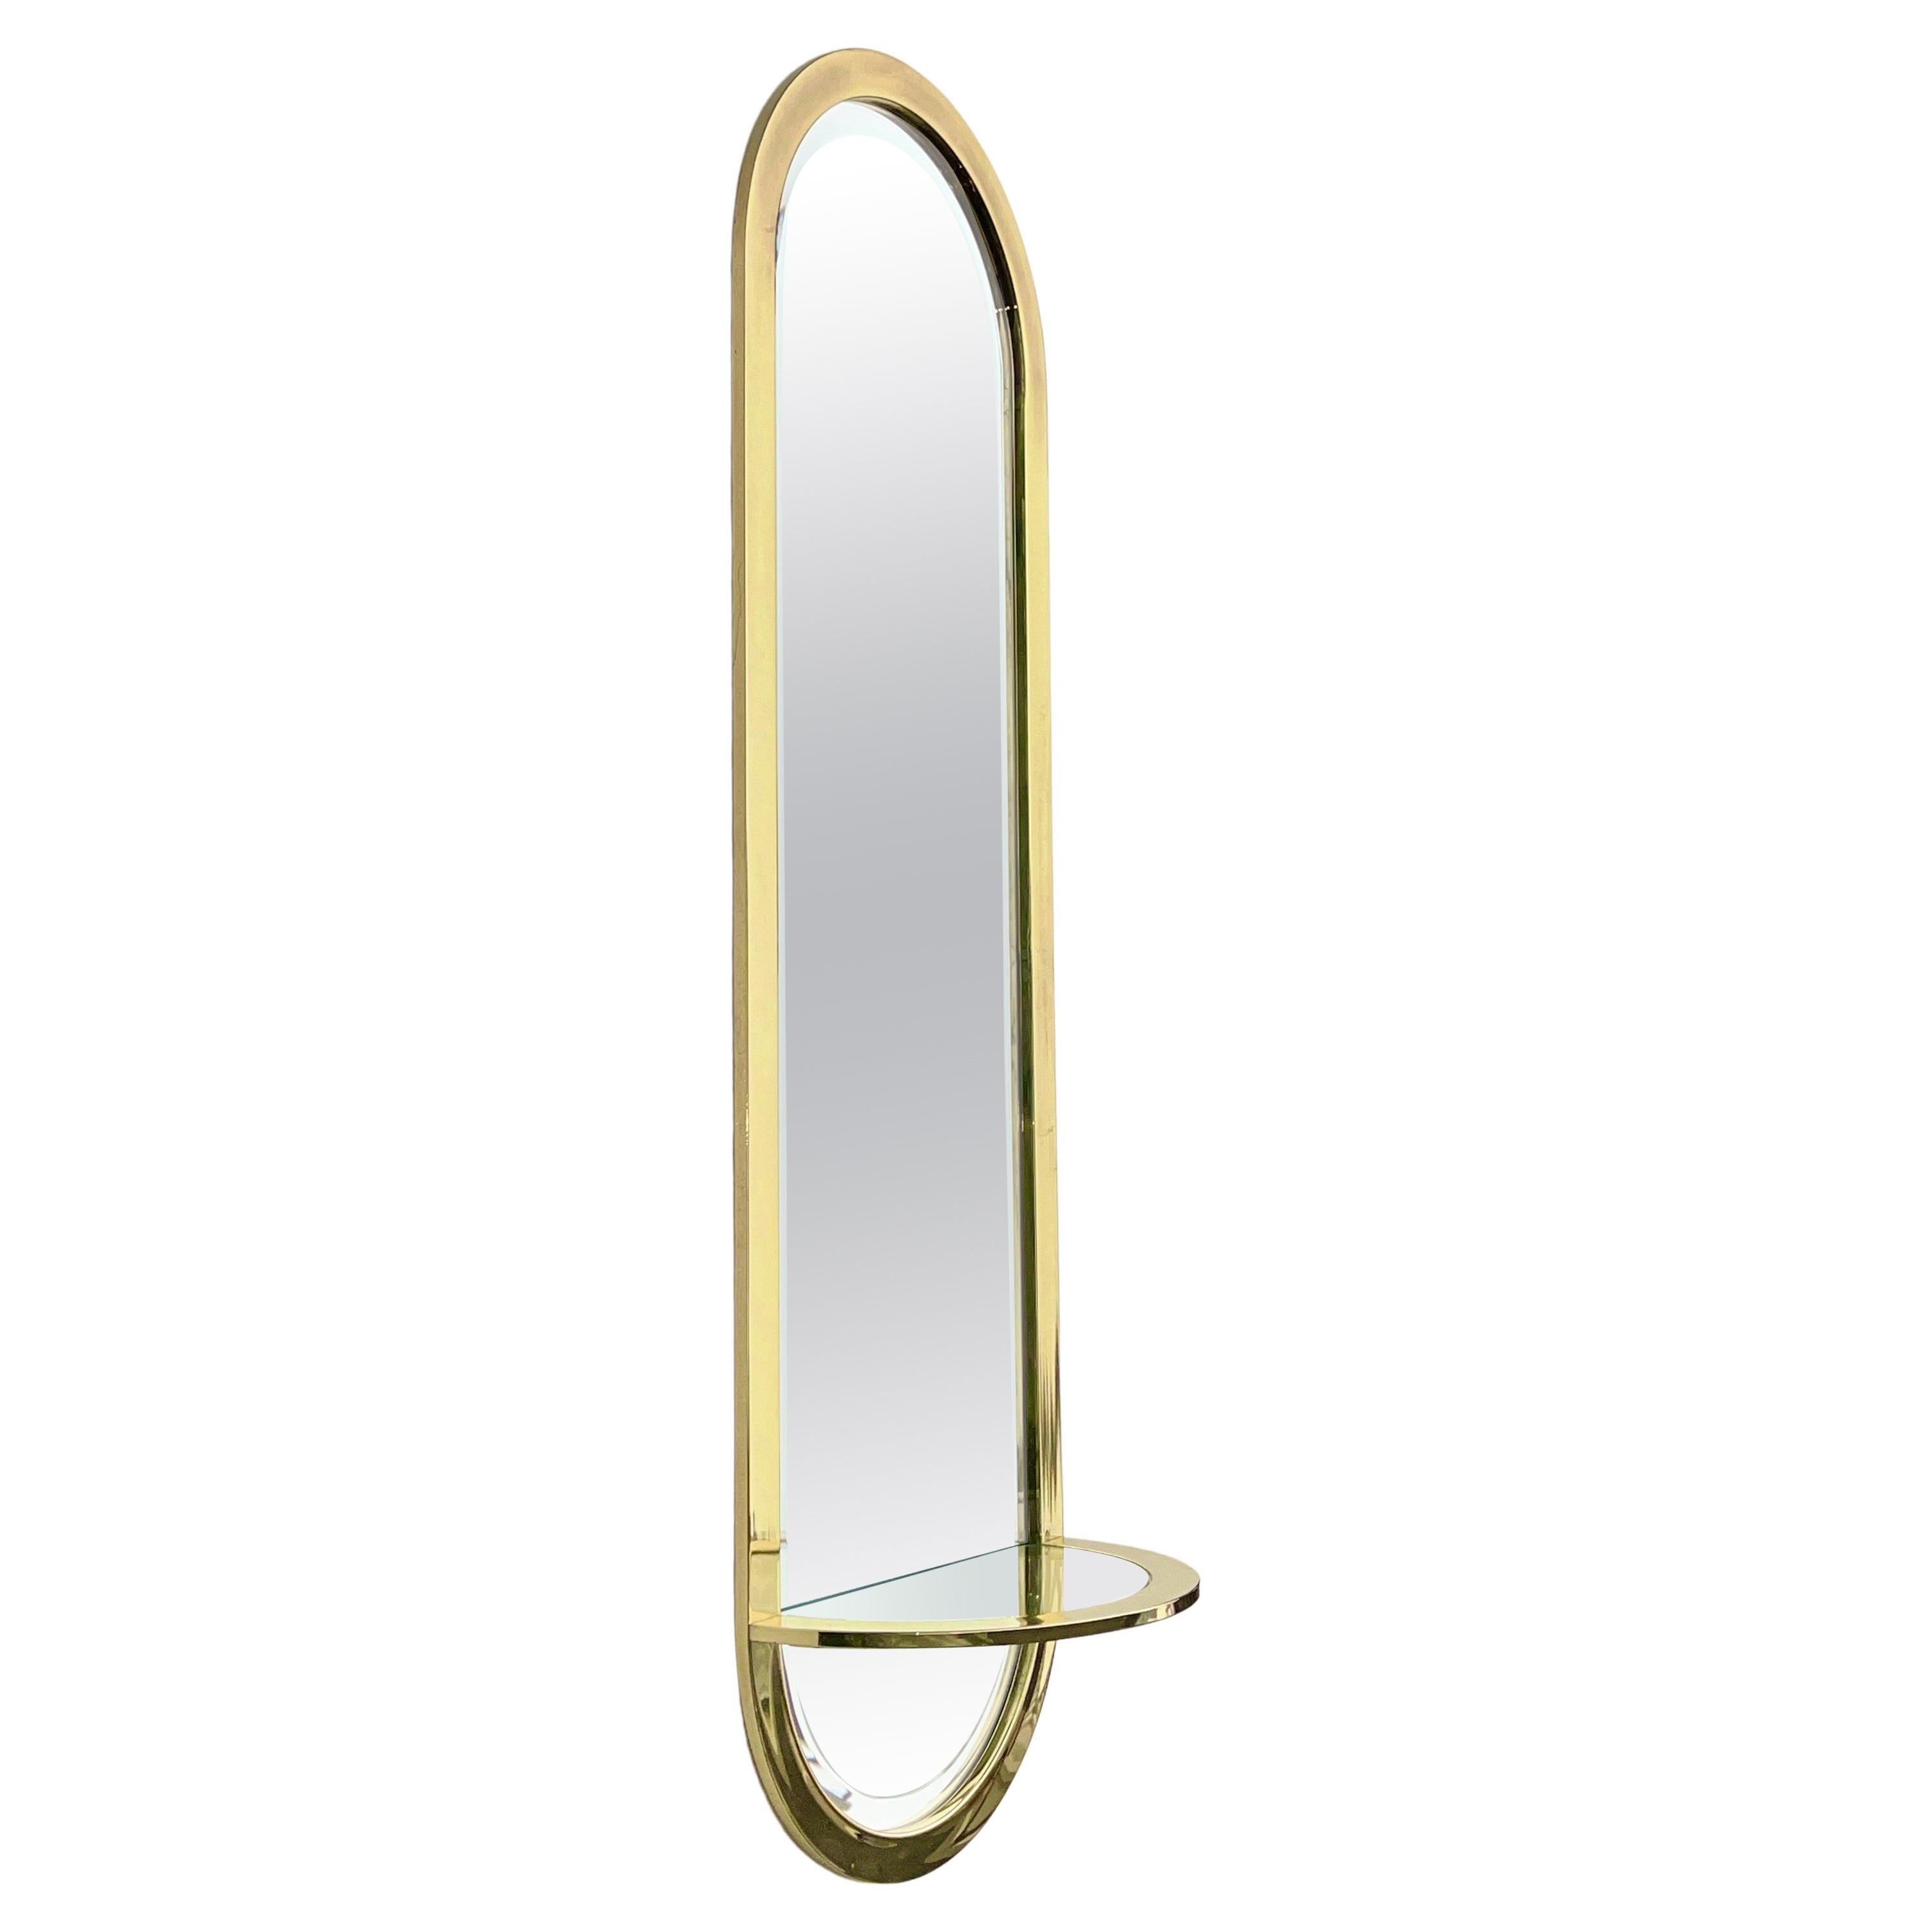 DIA Design Institute America Brass Racetrack Oval Mirror with Demilune Shelf For Sale